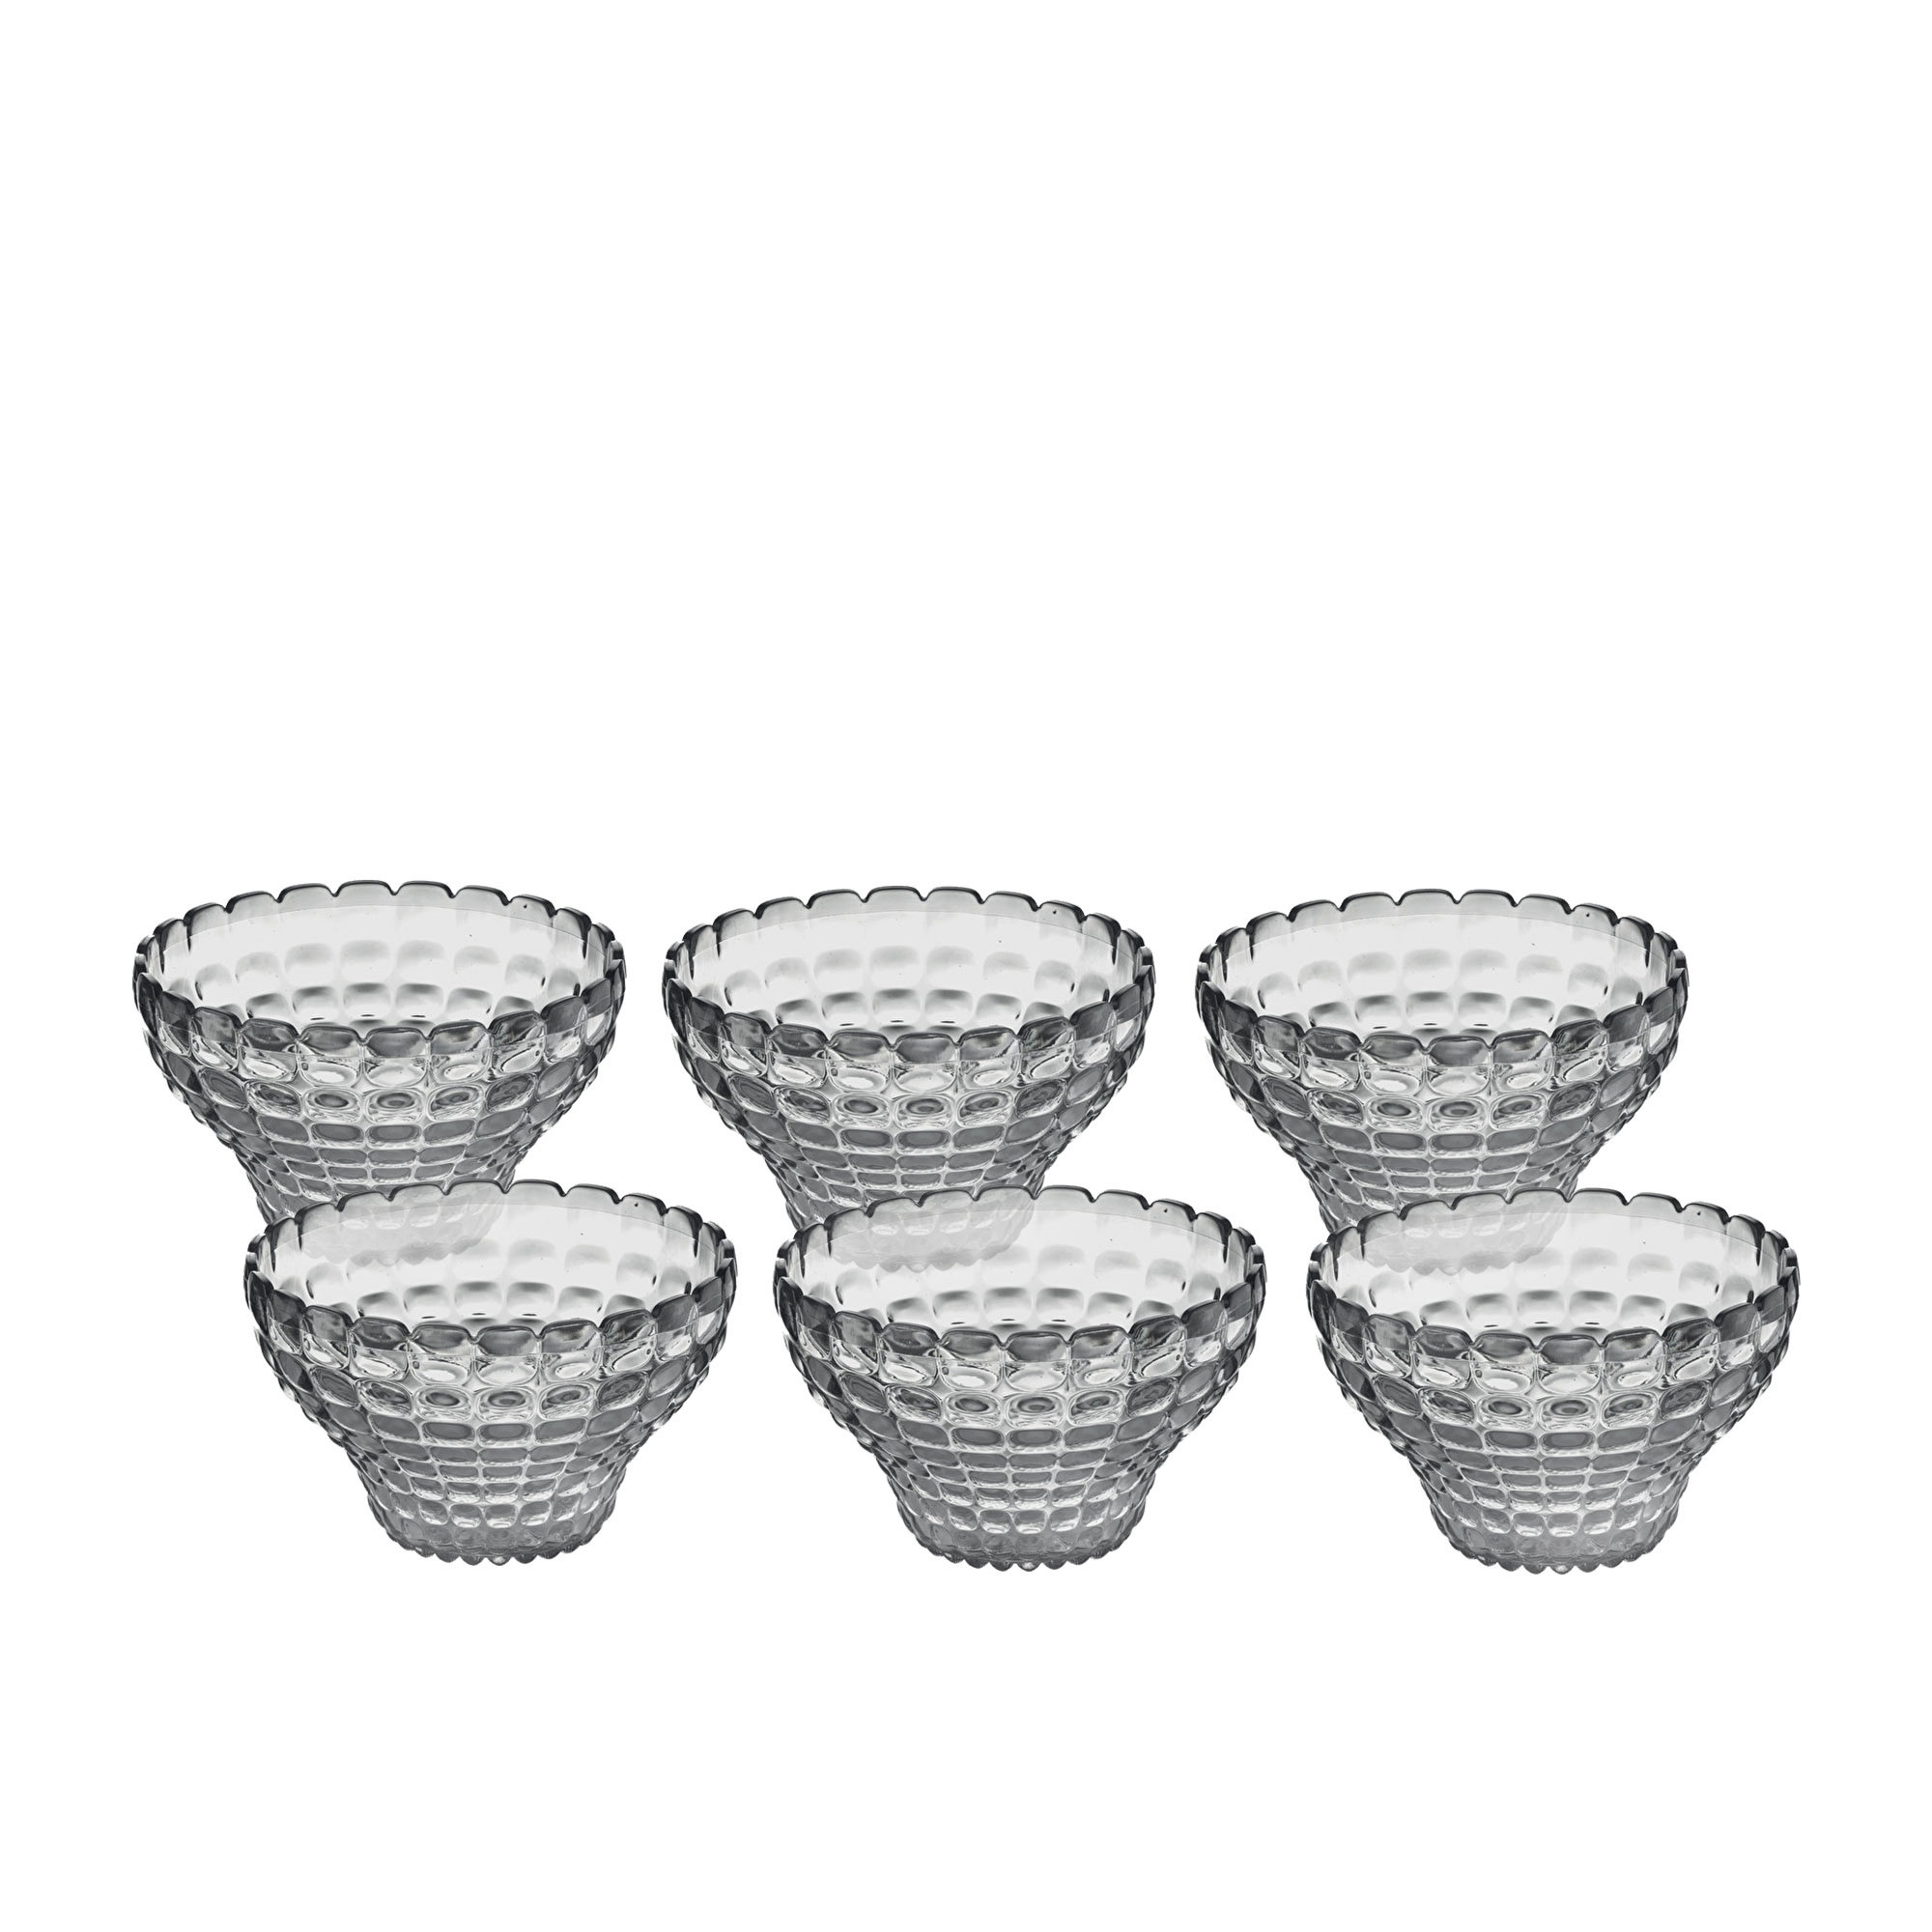 Guzzini Tiffany Serving Cup Set of 6 Grey Image 1